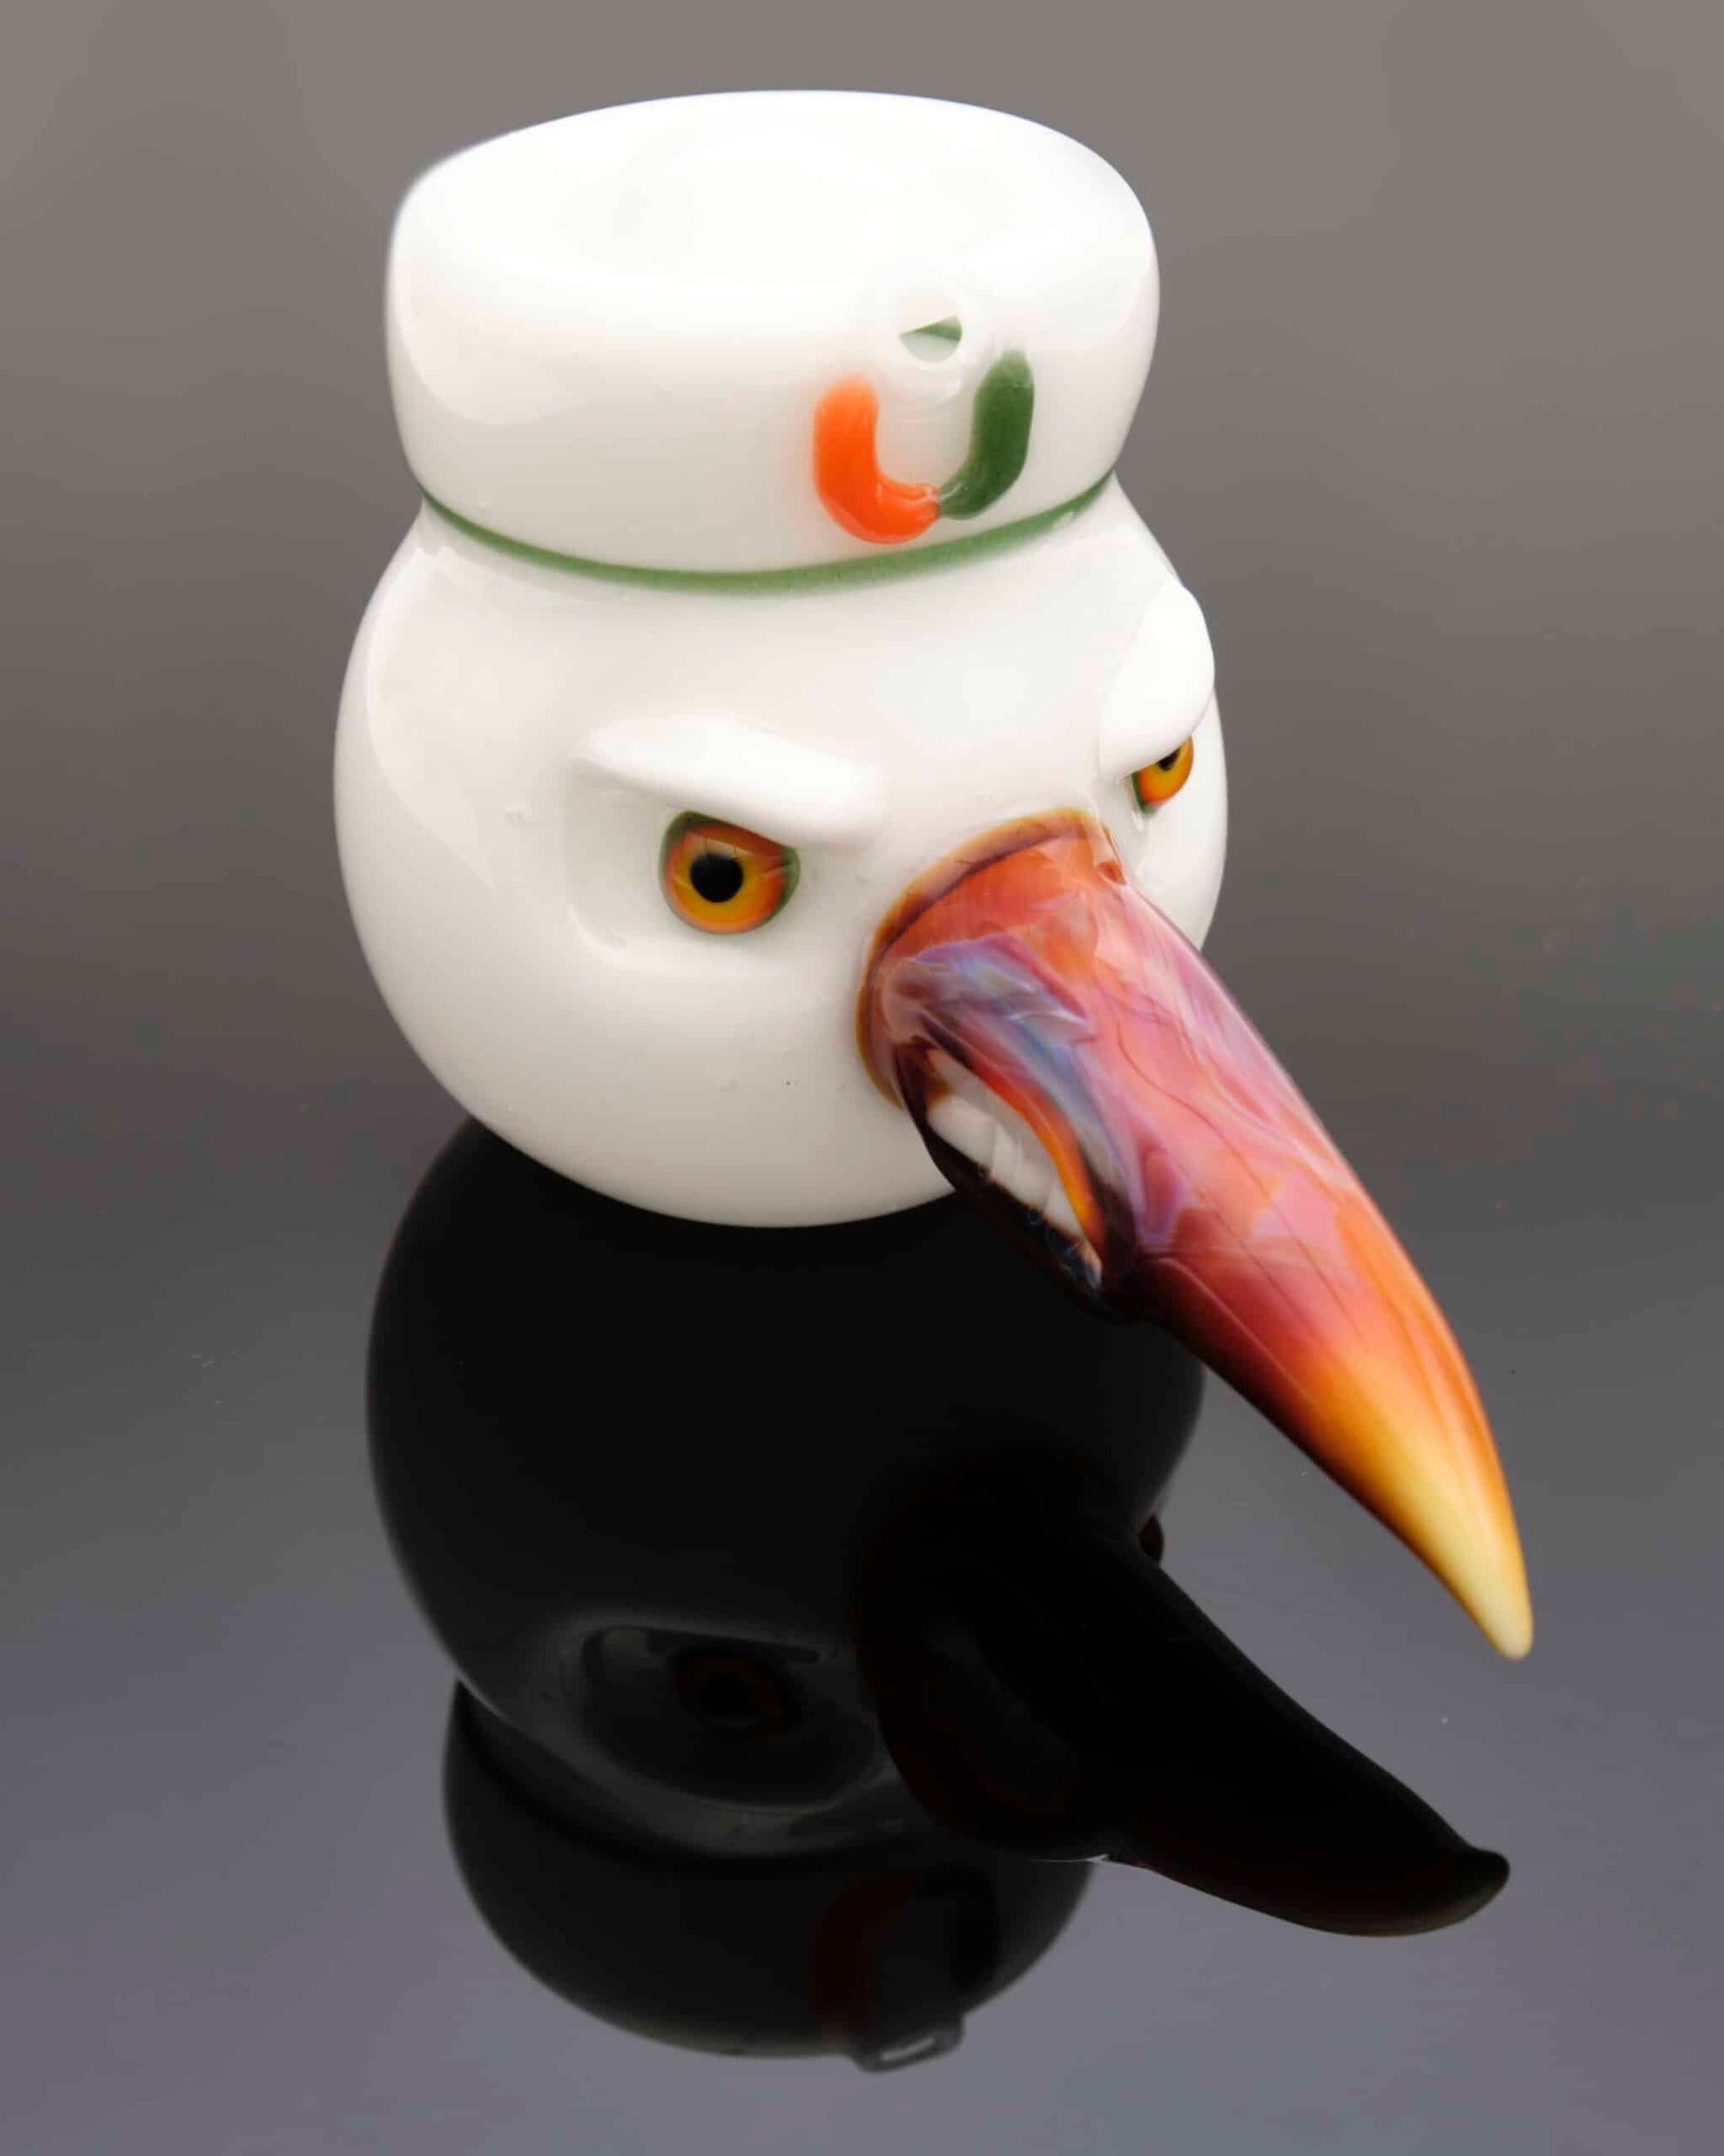 artisan-crafted design of the Sebastian Angry Bird Rig by Burtoni